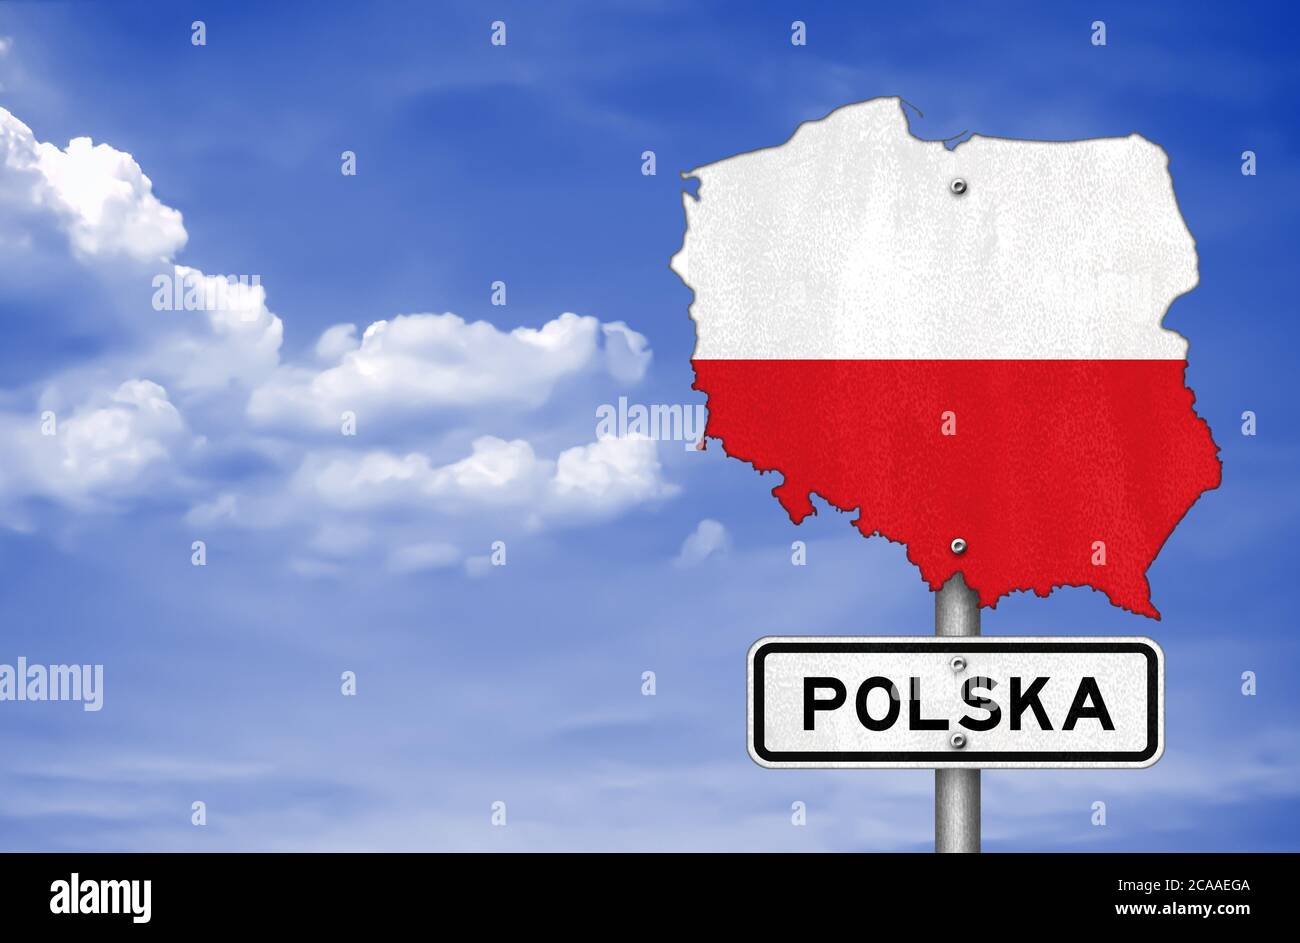 Polska - road sign map Stock Photo